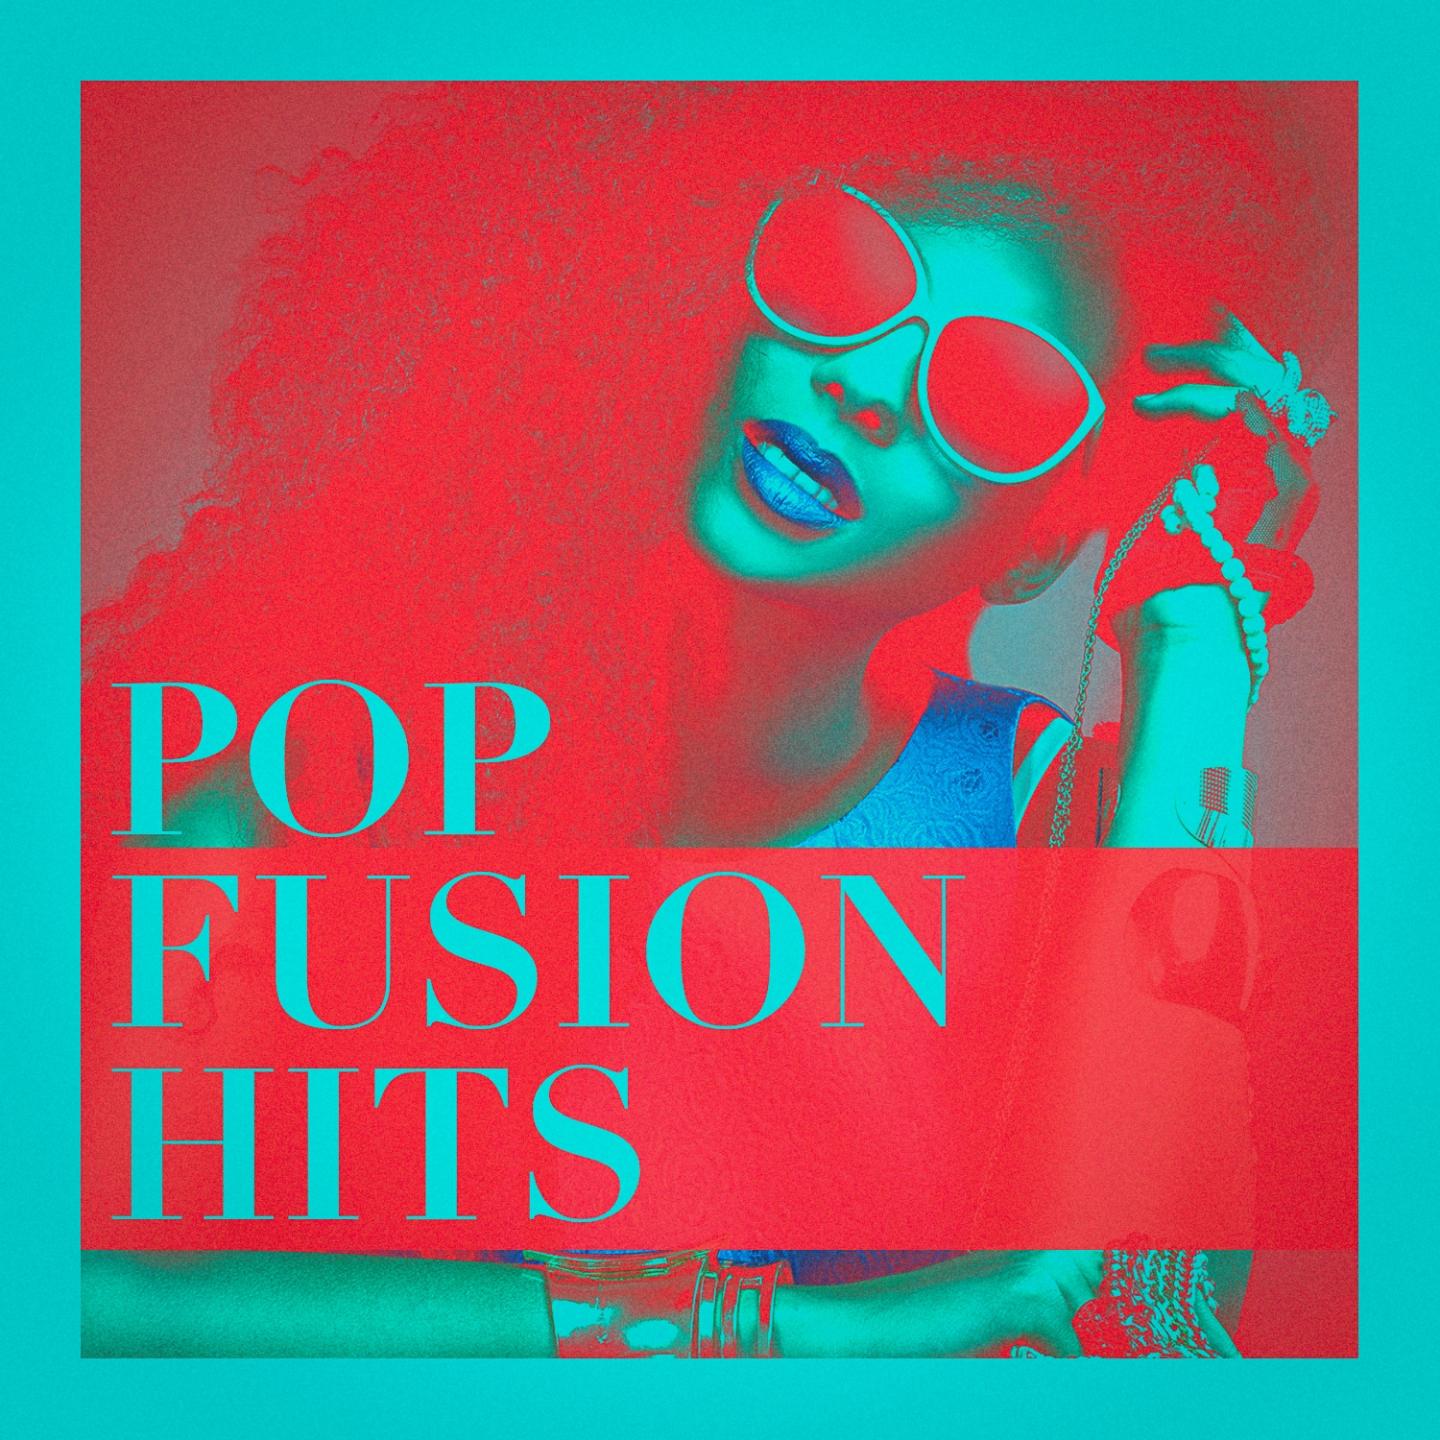 Pop Fusion Hits